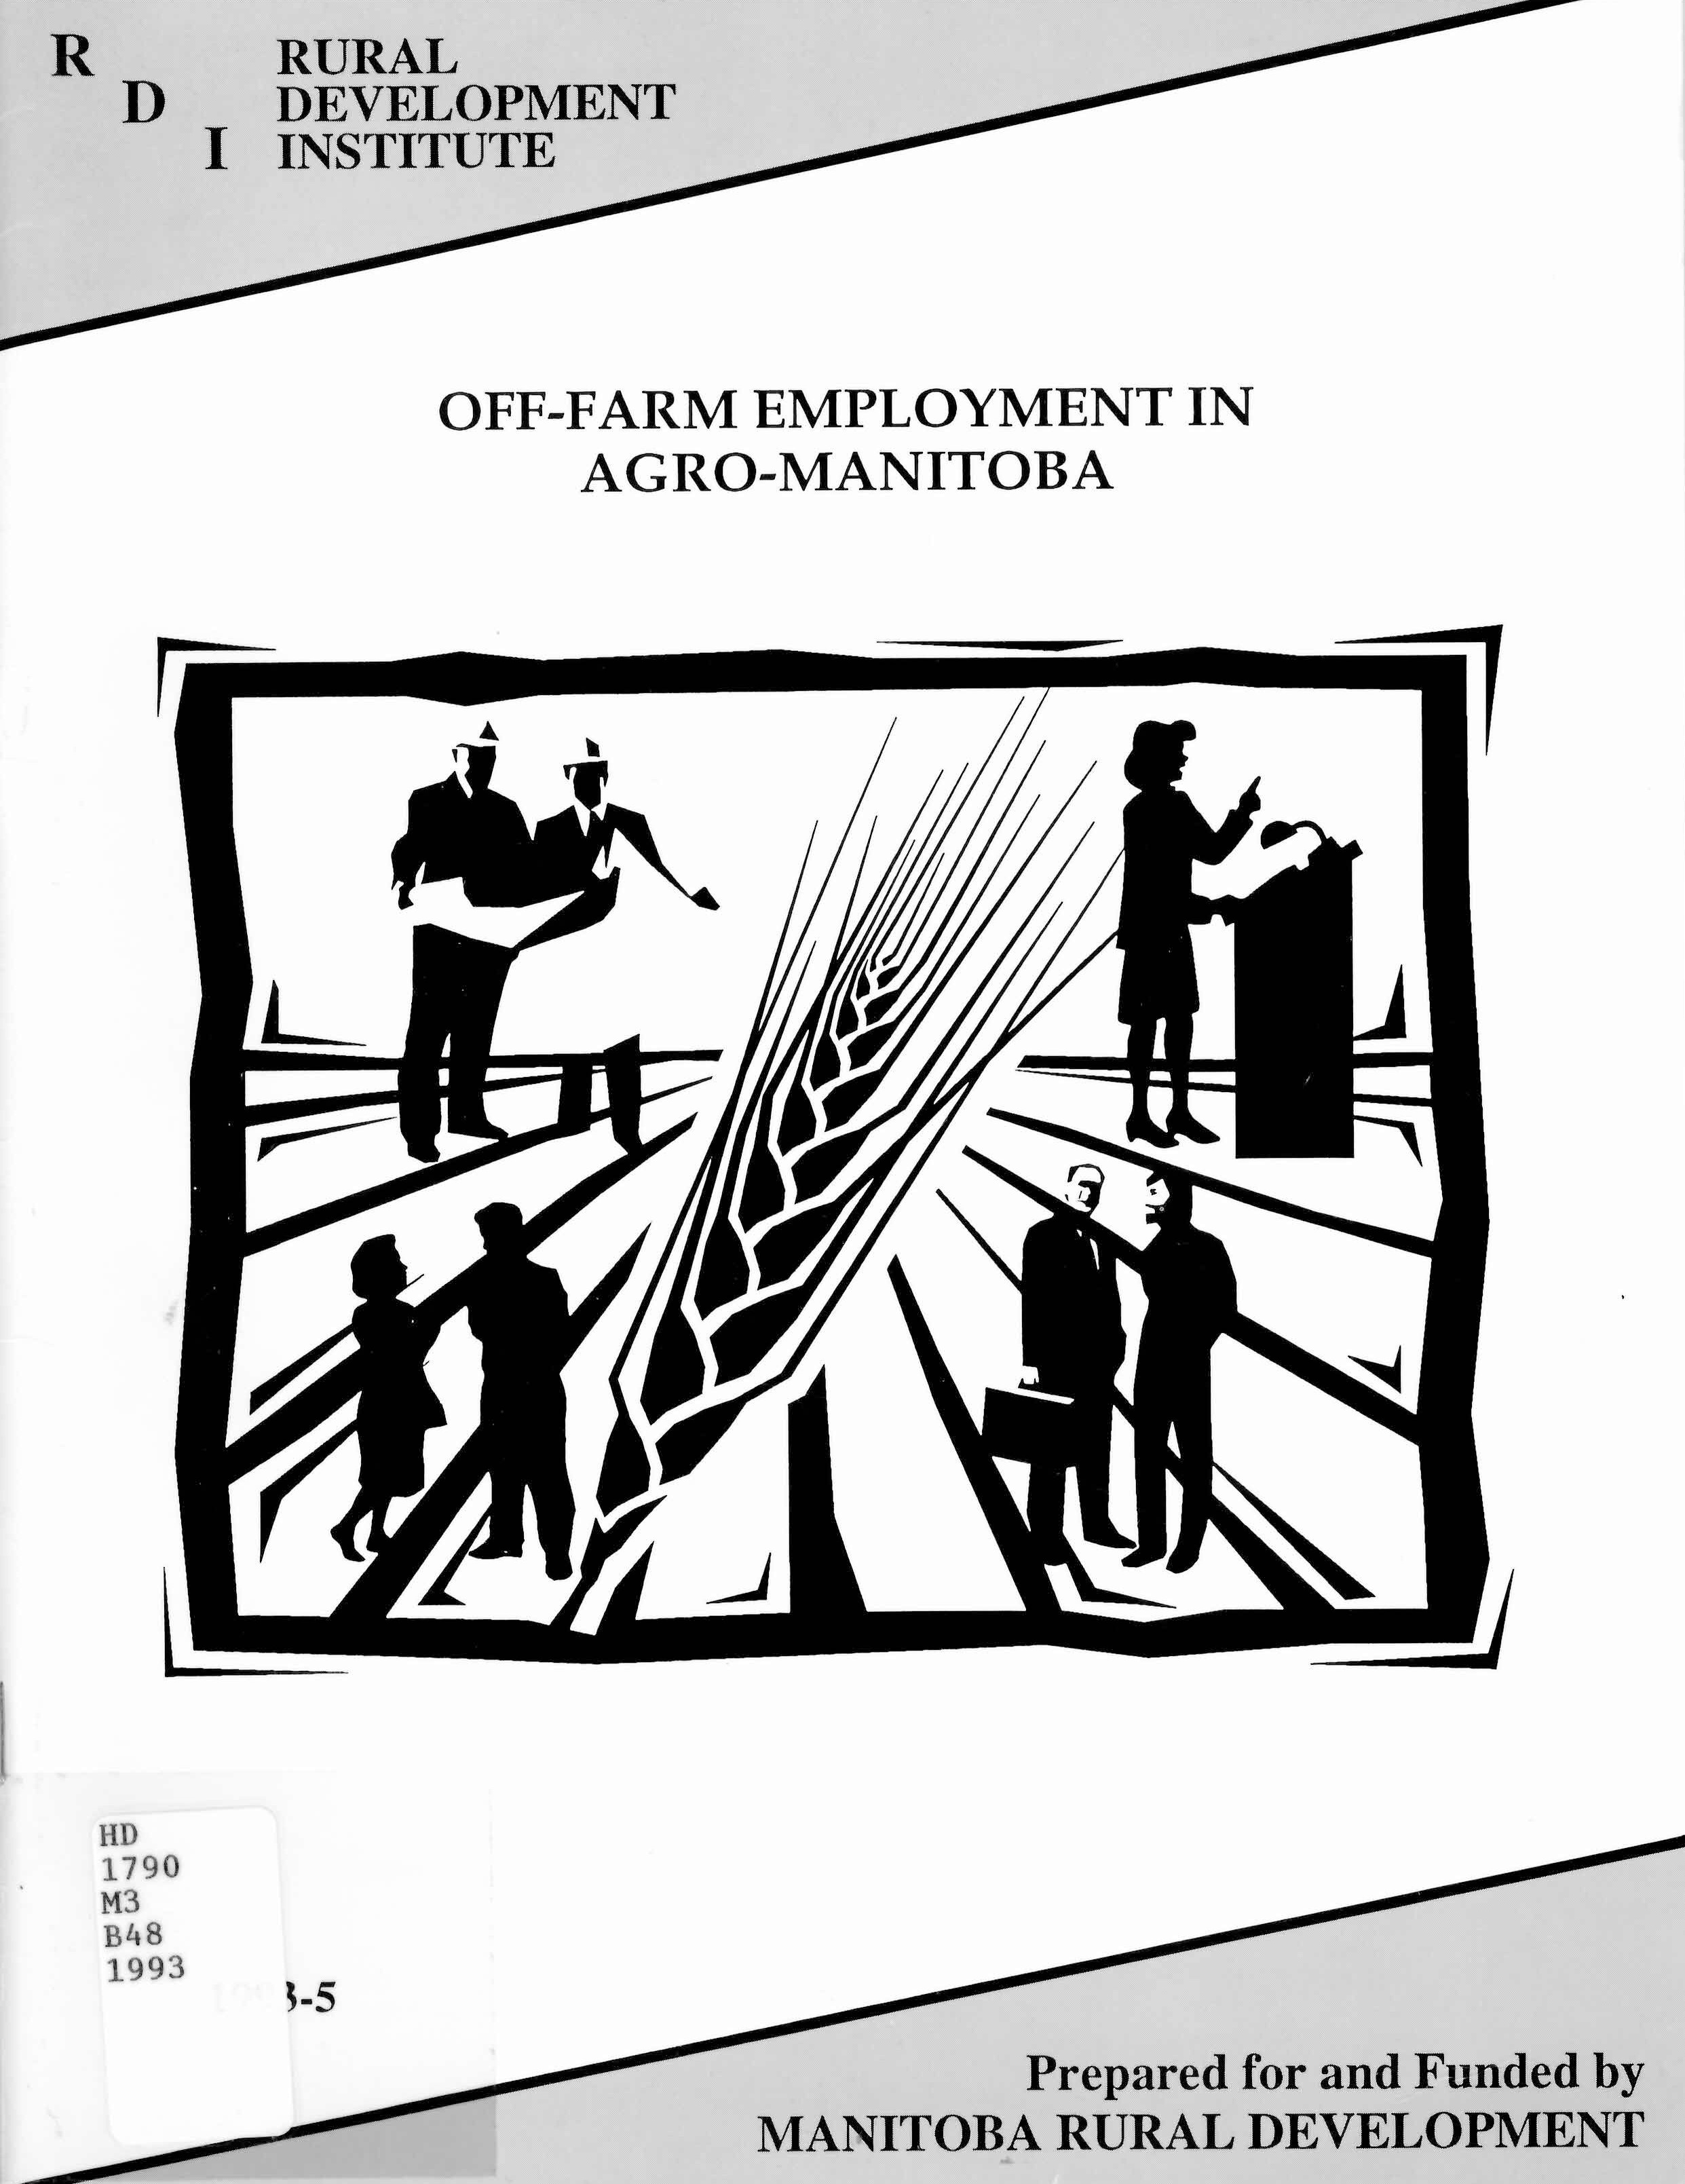 Off-farm employment in agro-Manitoba